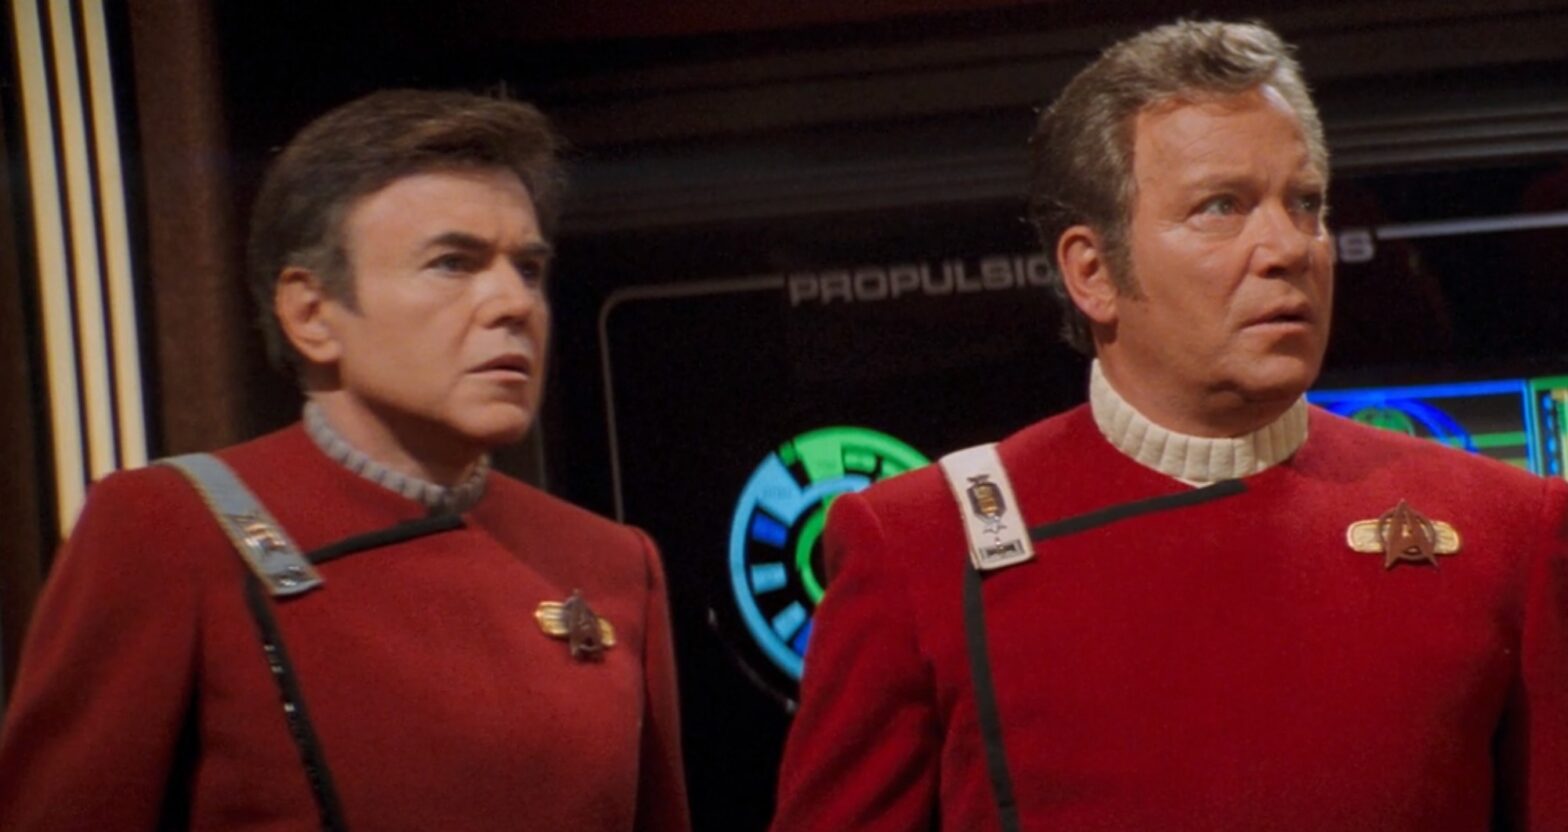 Star Trek Original Series Actor Returns To The Franchise